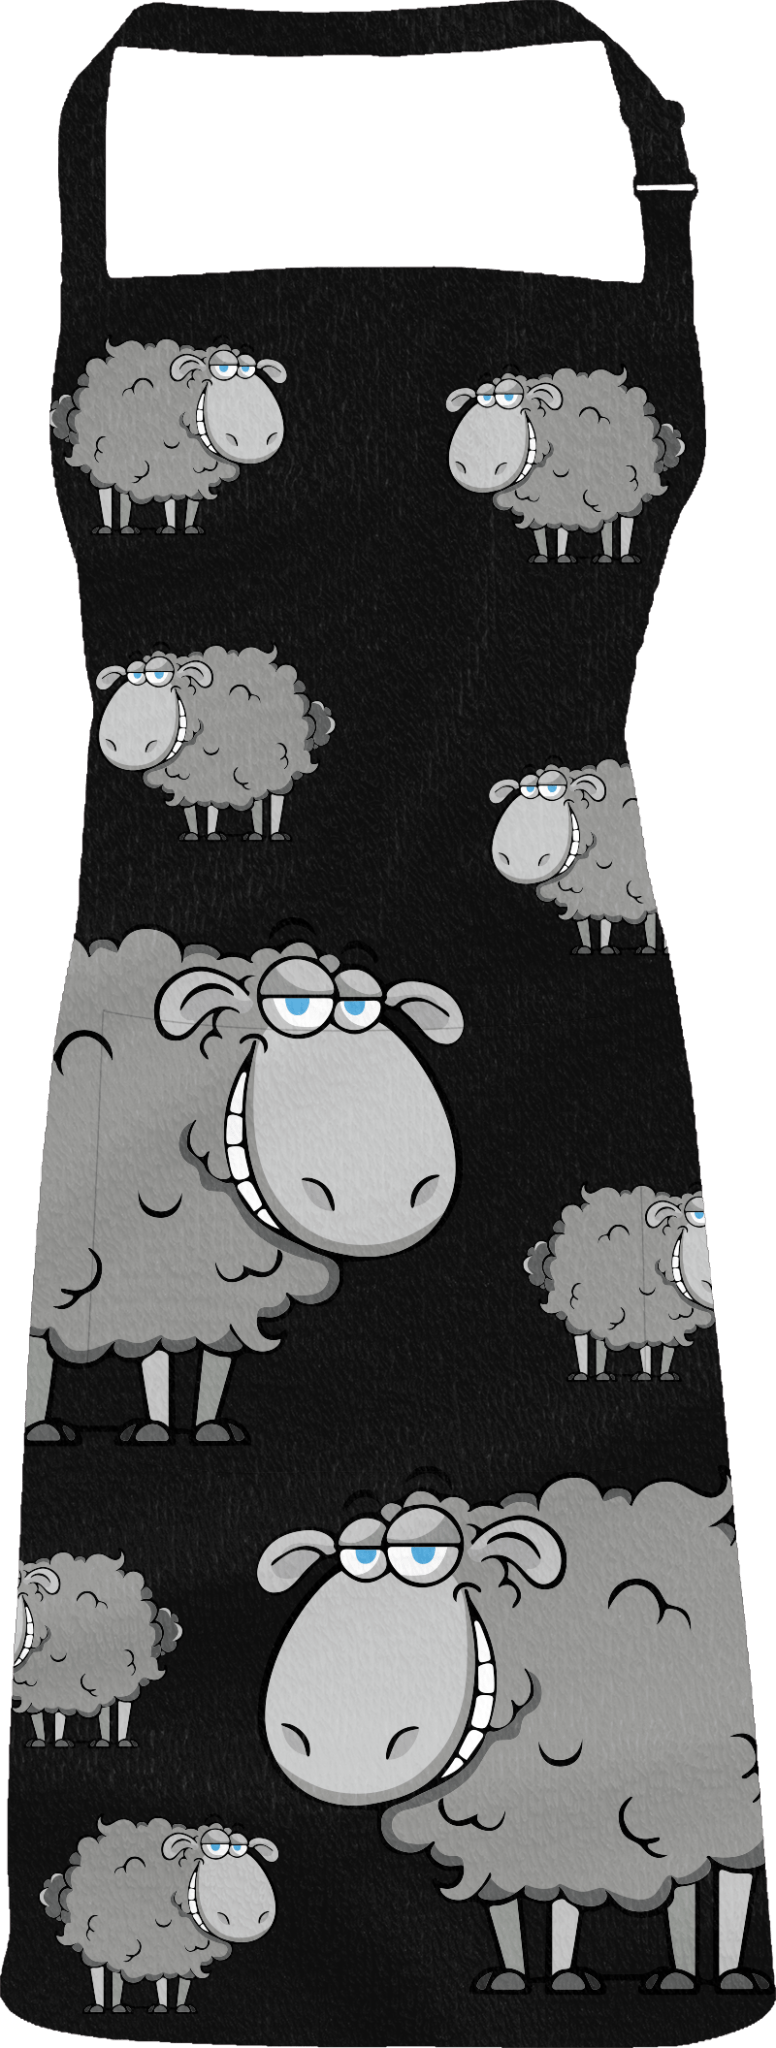 Black Sheep Apron - fungear.com.au